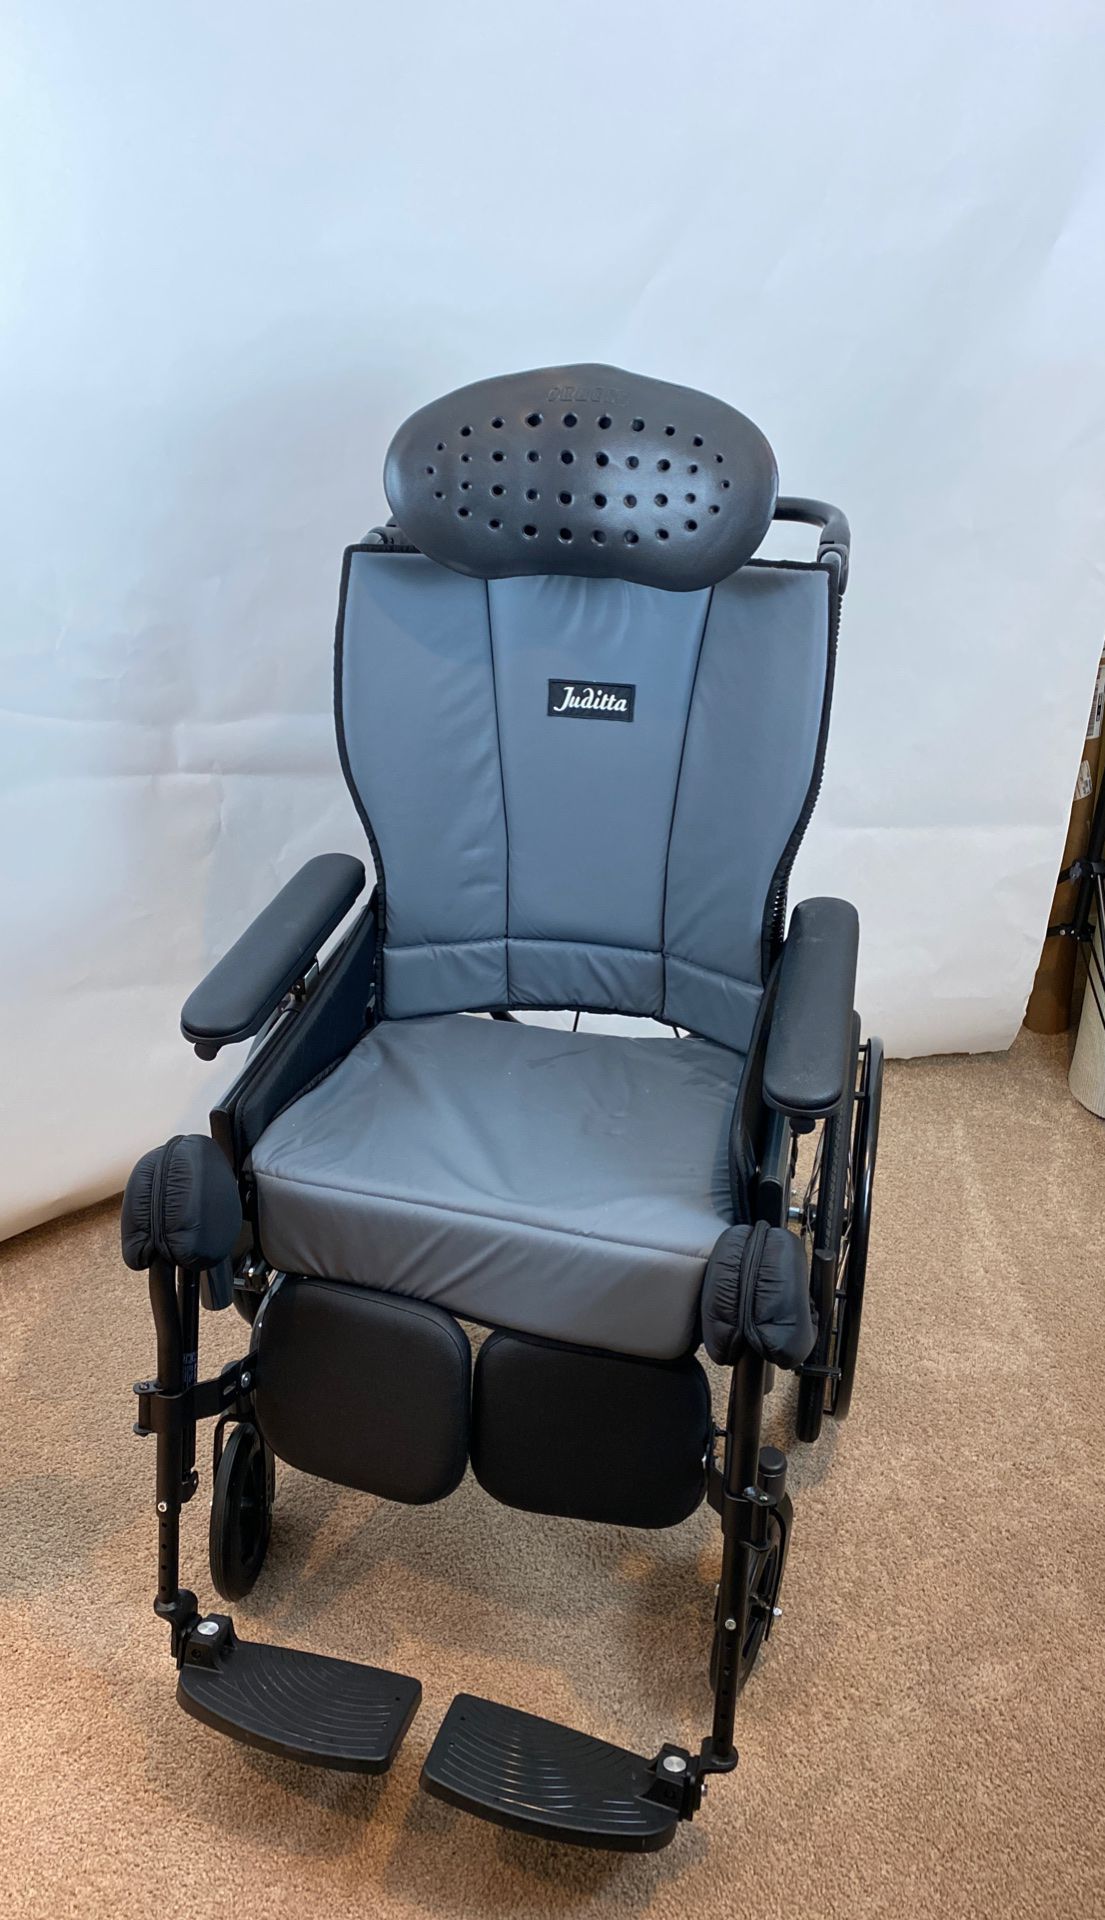 Juditta B60 tilt-in-space wheelchair